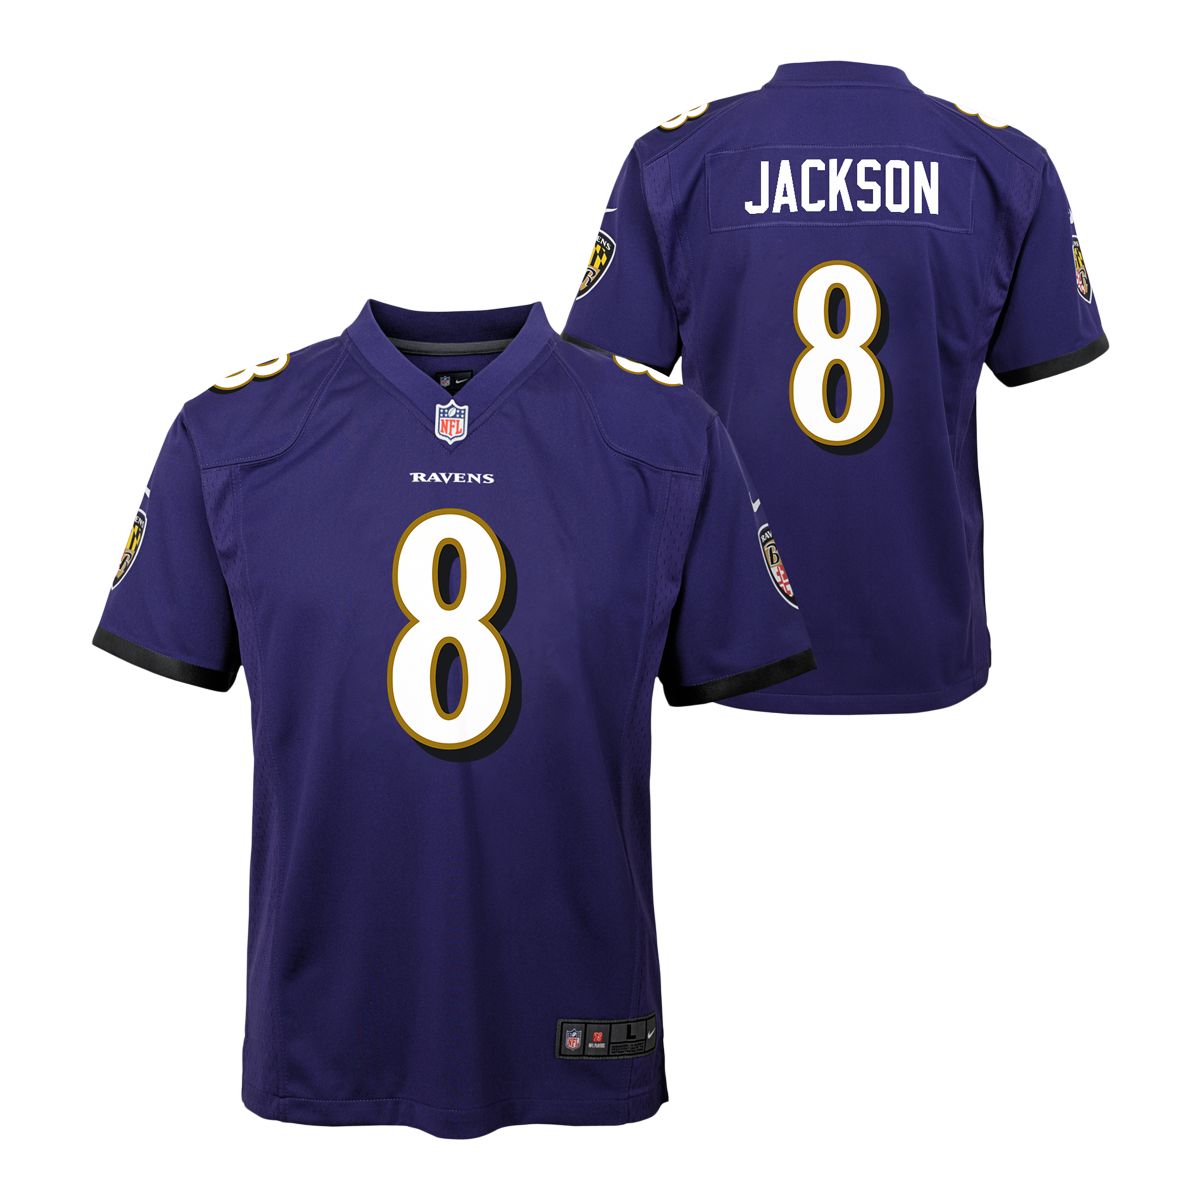 Image of Youth Baltimore Ravens Outerstuff Lamar Jackson Game Jersey